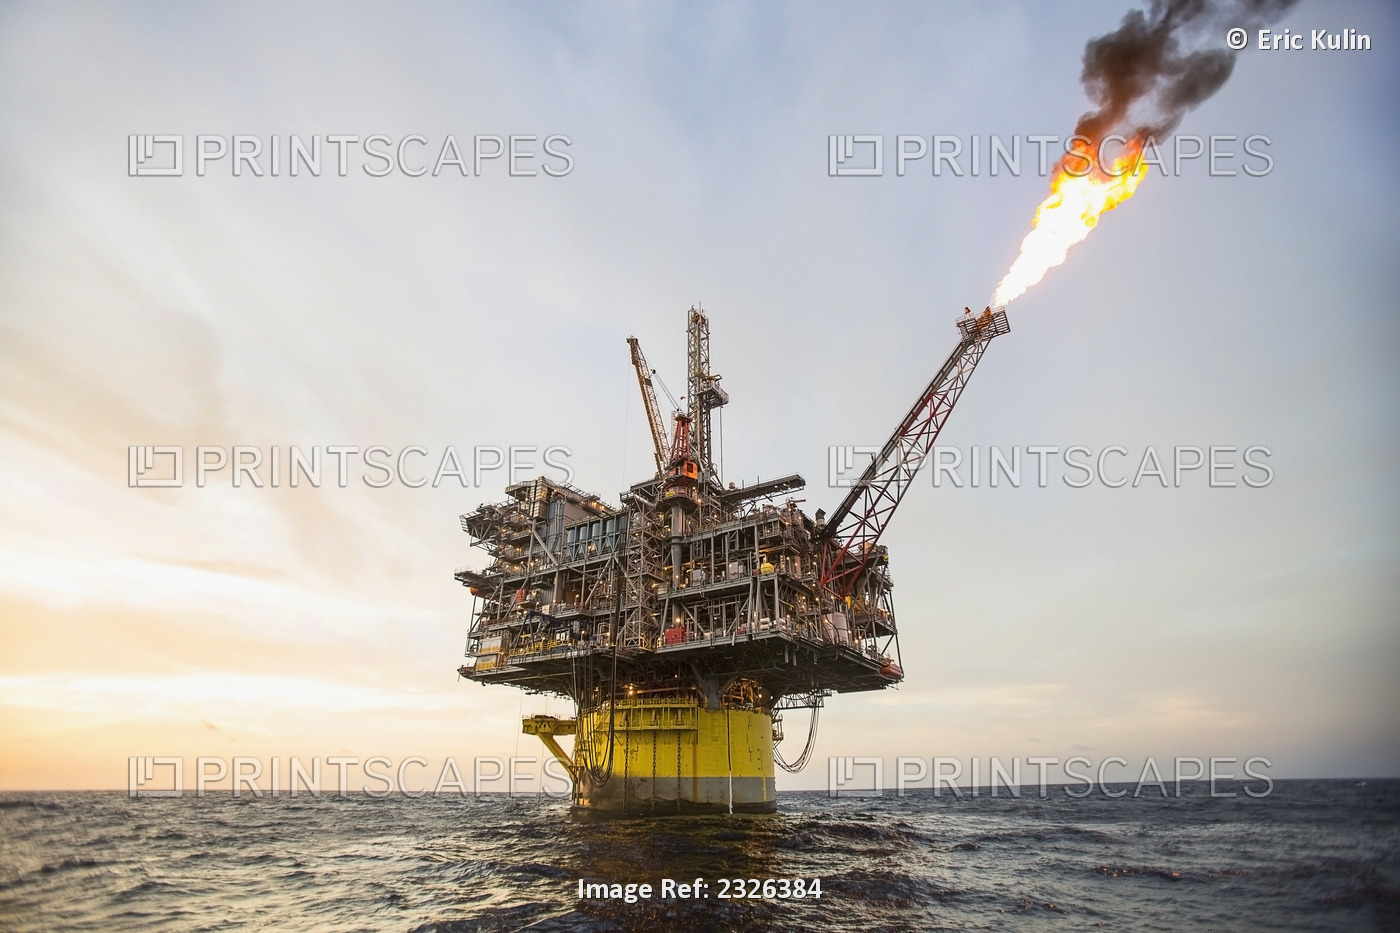 Flame coming off perdido oil rig in gulf of mexico; Corpus christi texas usa